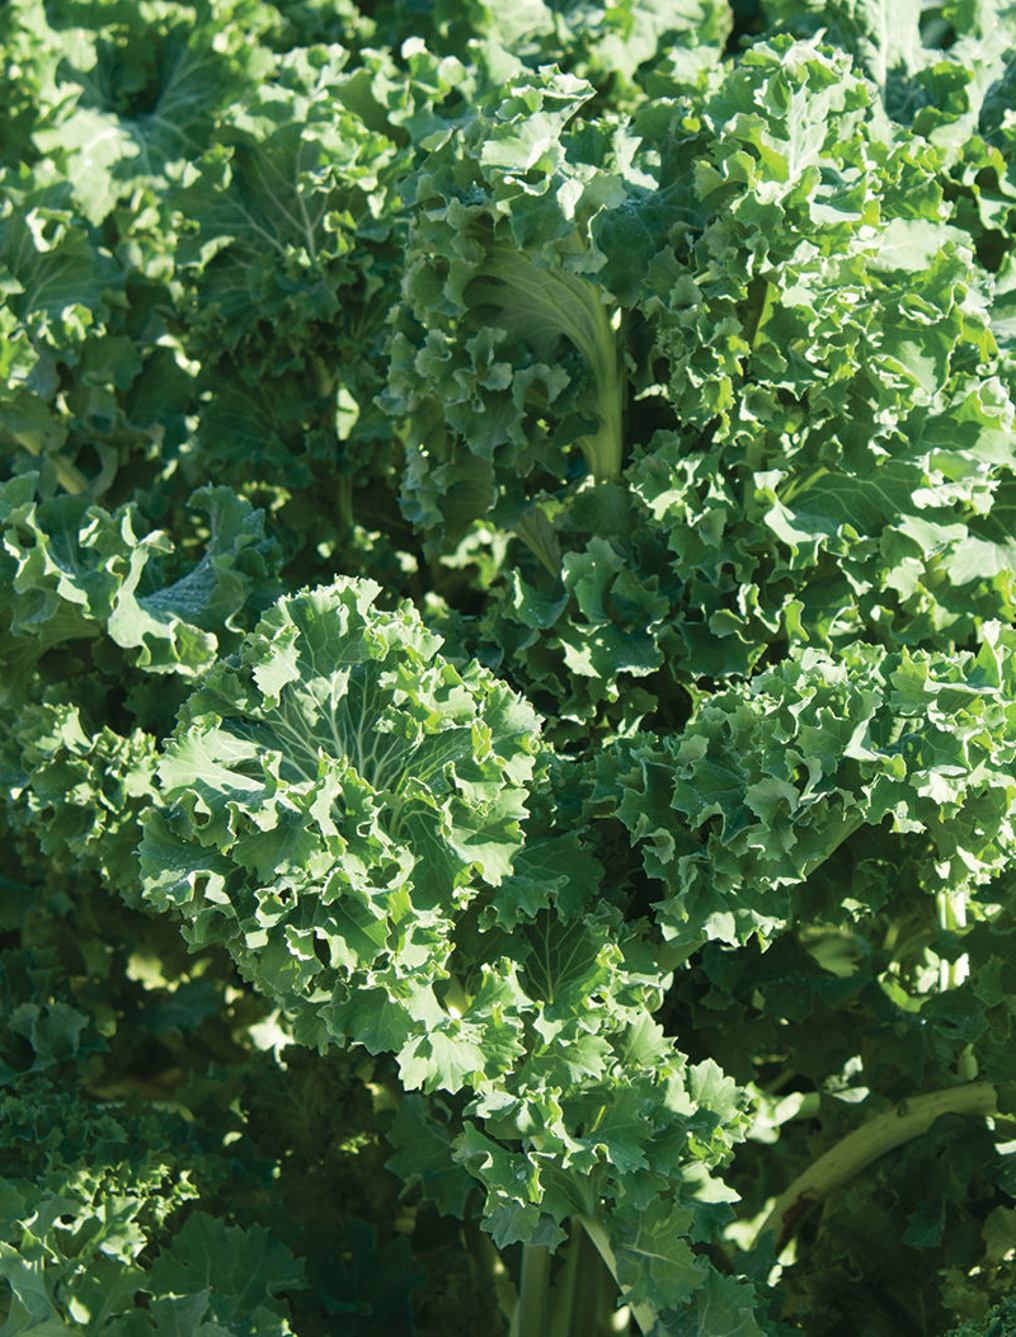 KALE ‘Siberian’ - Brassica napus pabularia